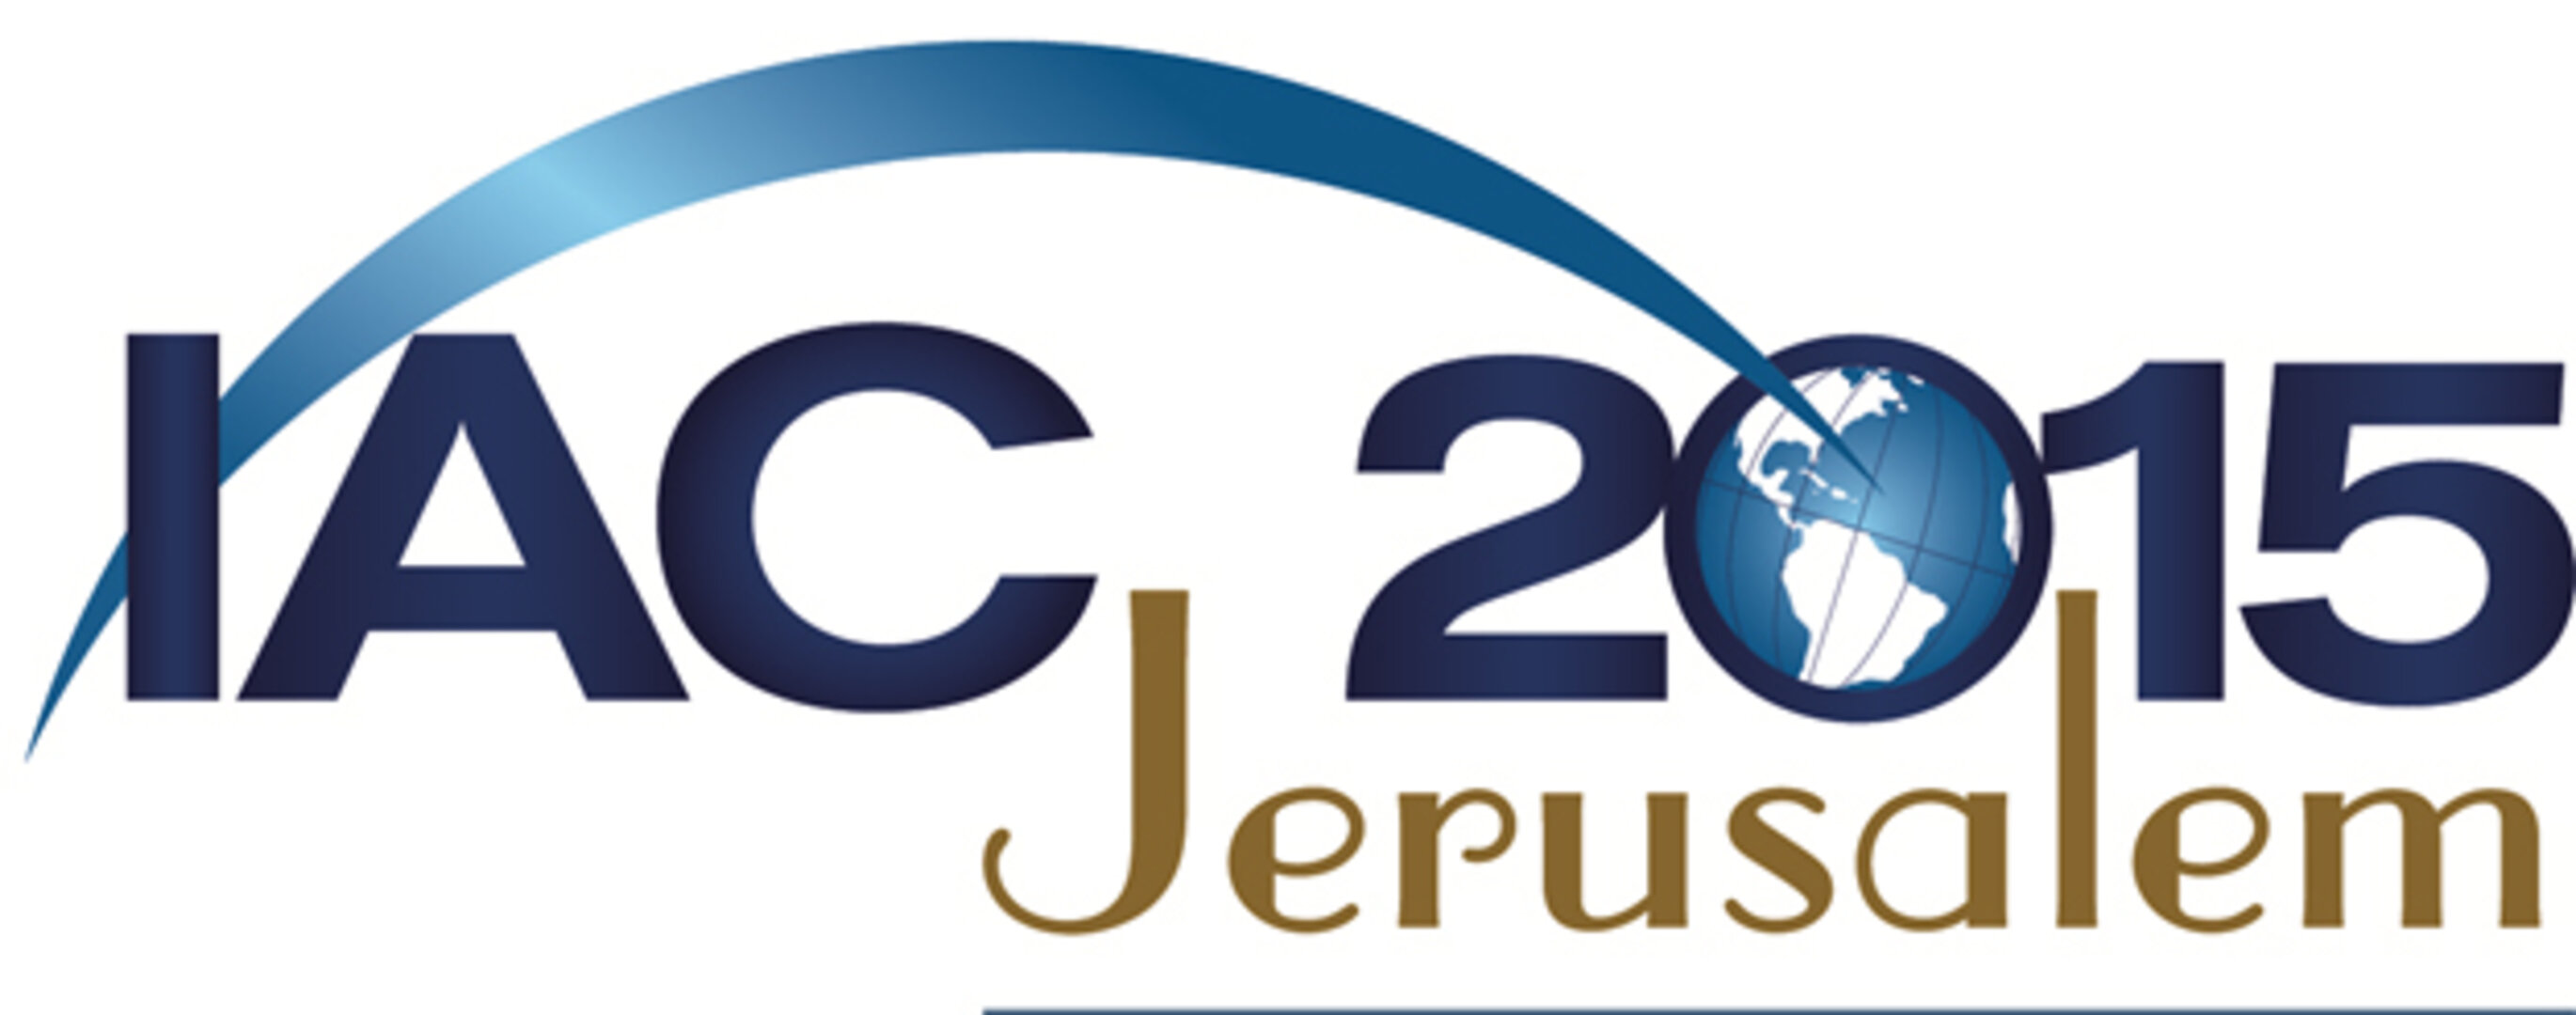 IAC 2015 logo